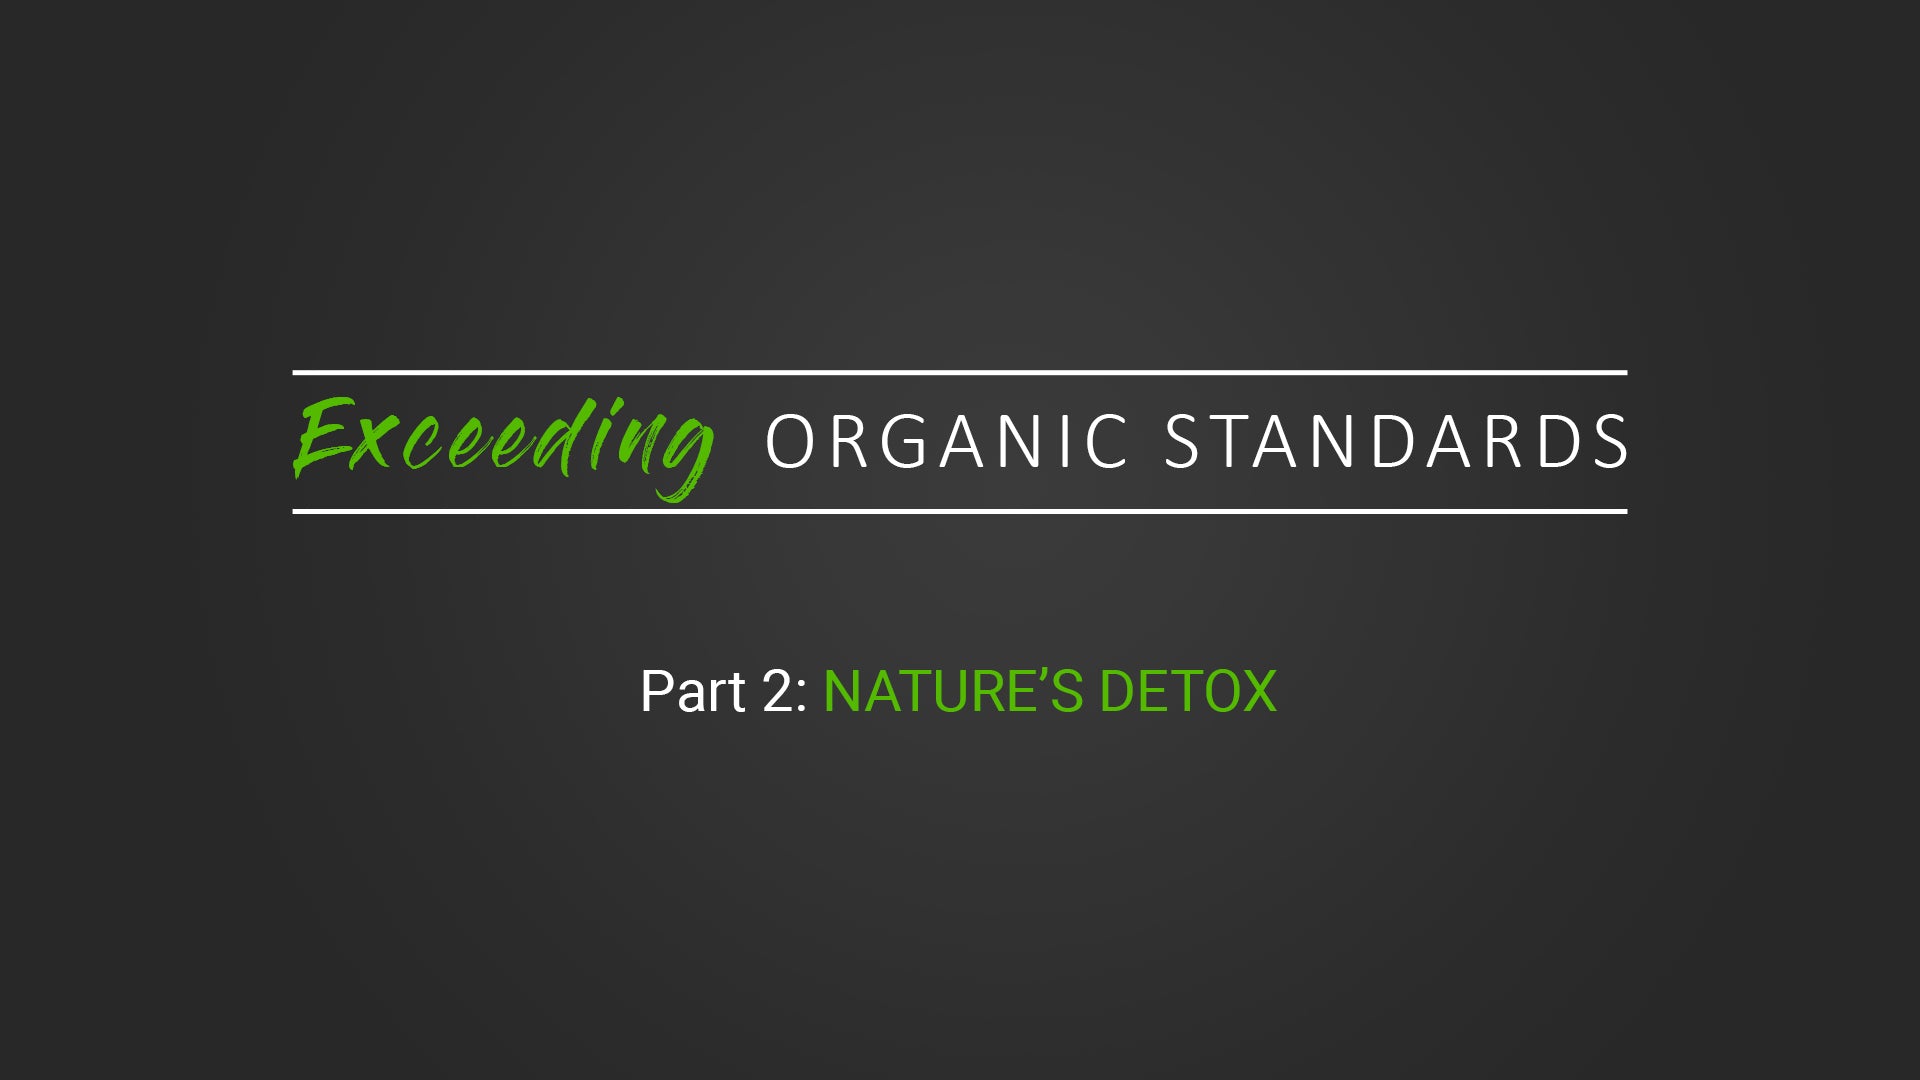 Exceeding Organic Standards: Part 2 Nature's Detox